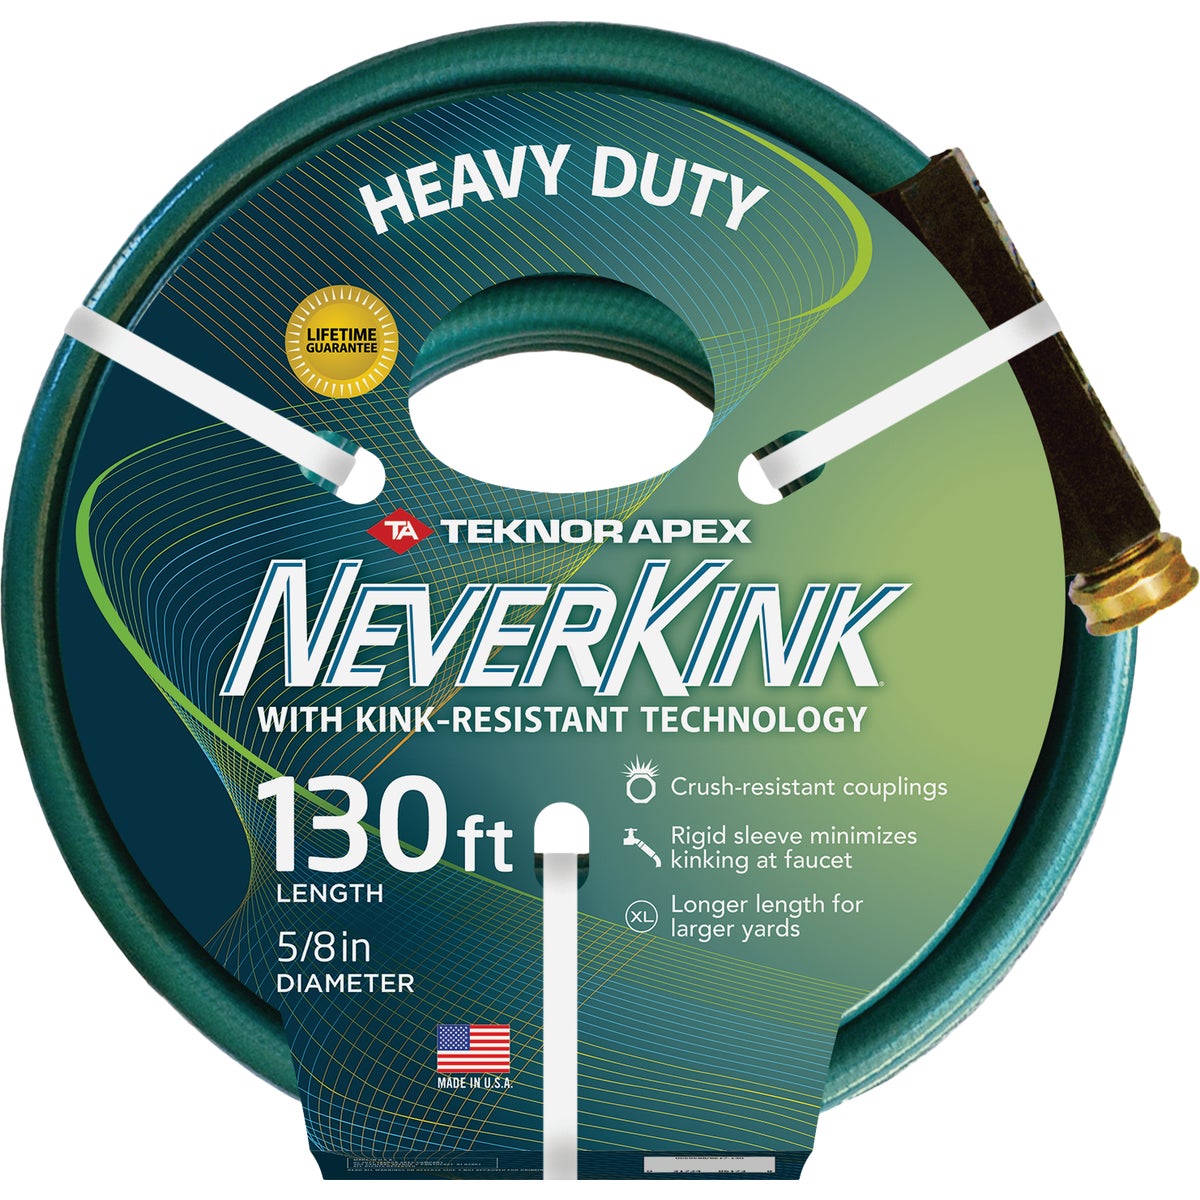 Item 746243, Neverkink Heavy-Duty garden hose.